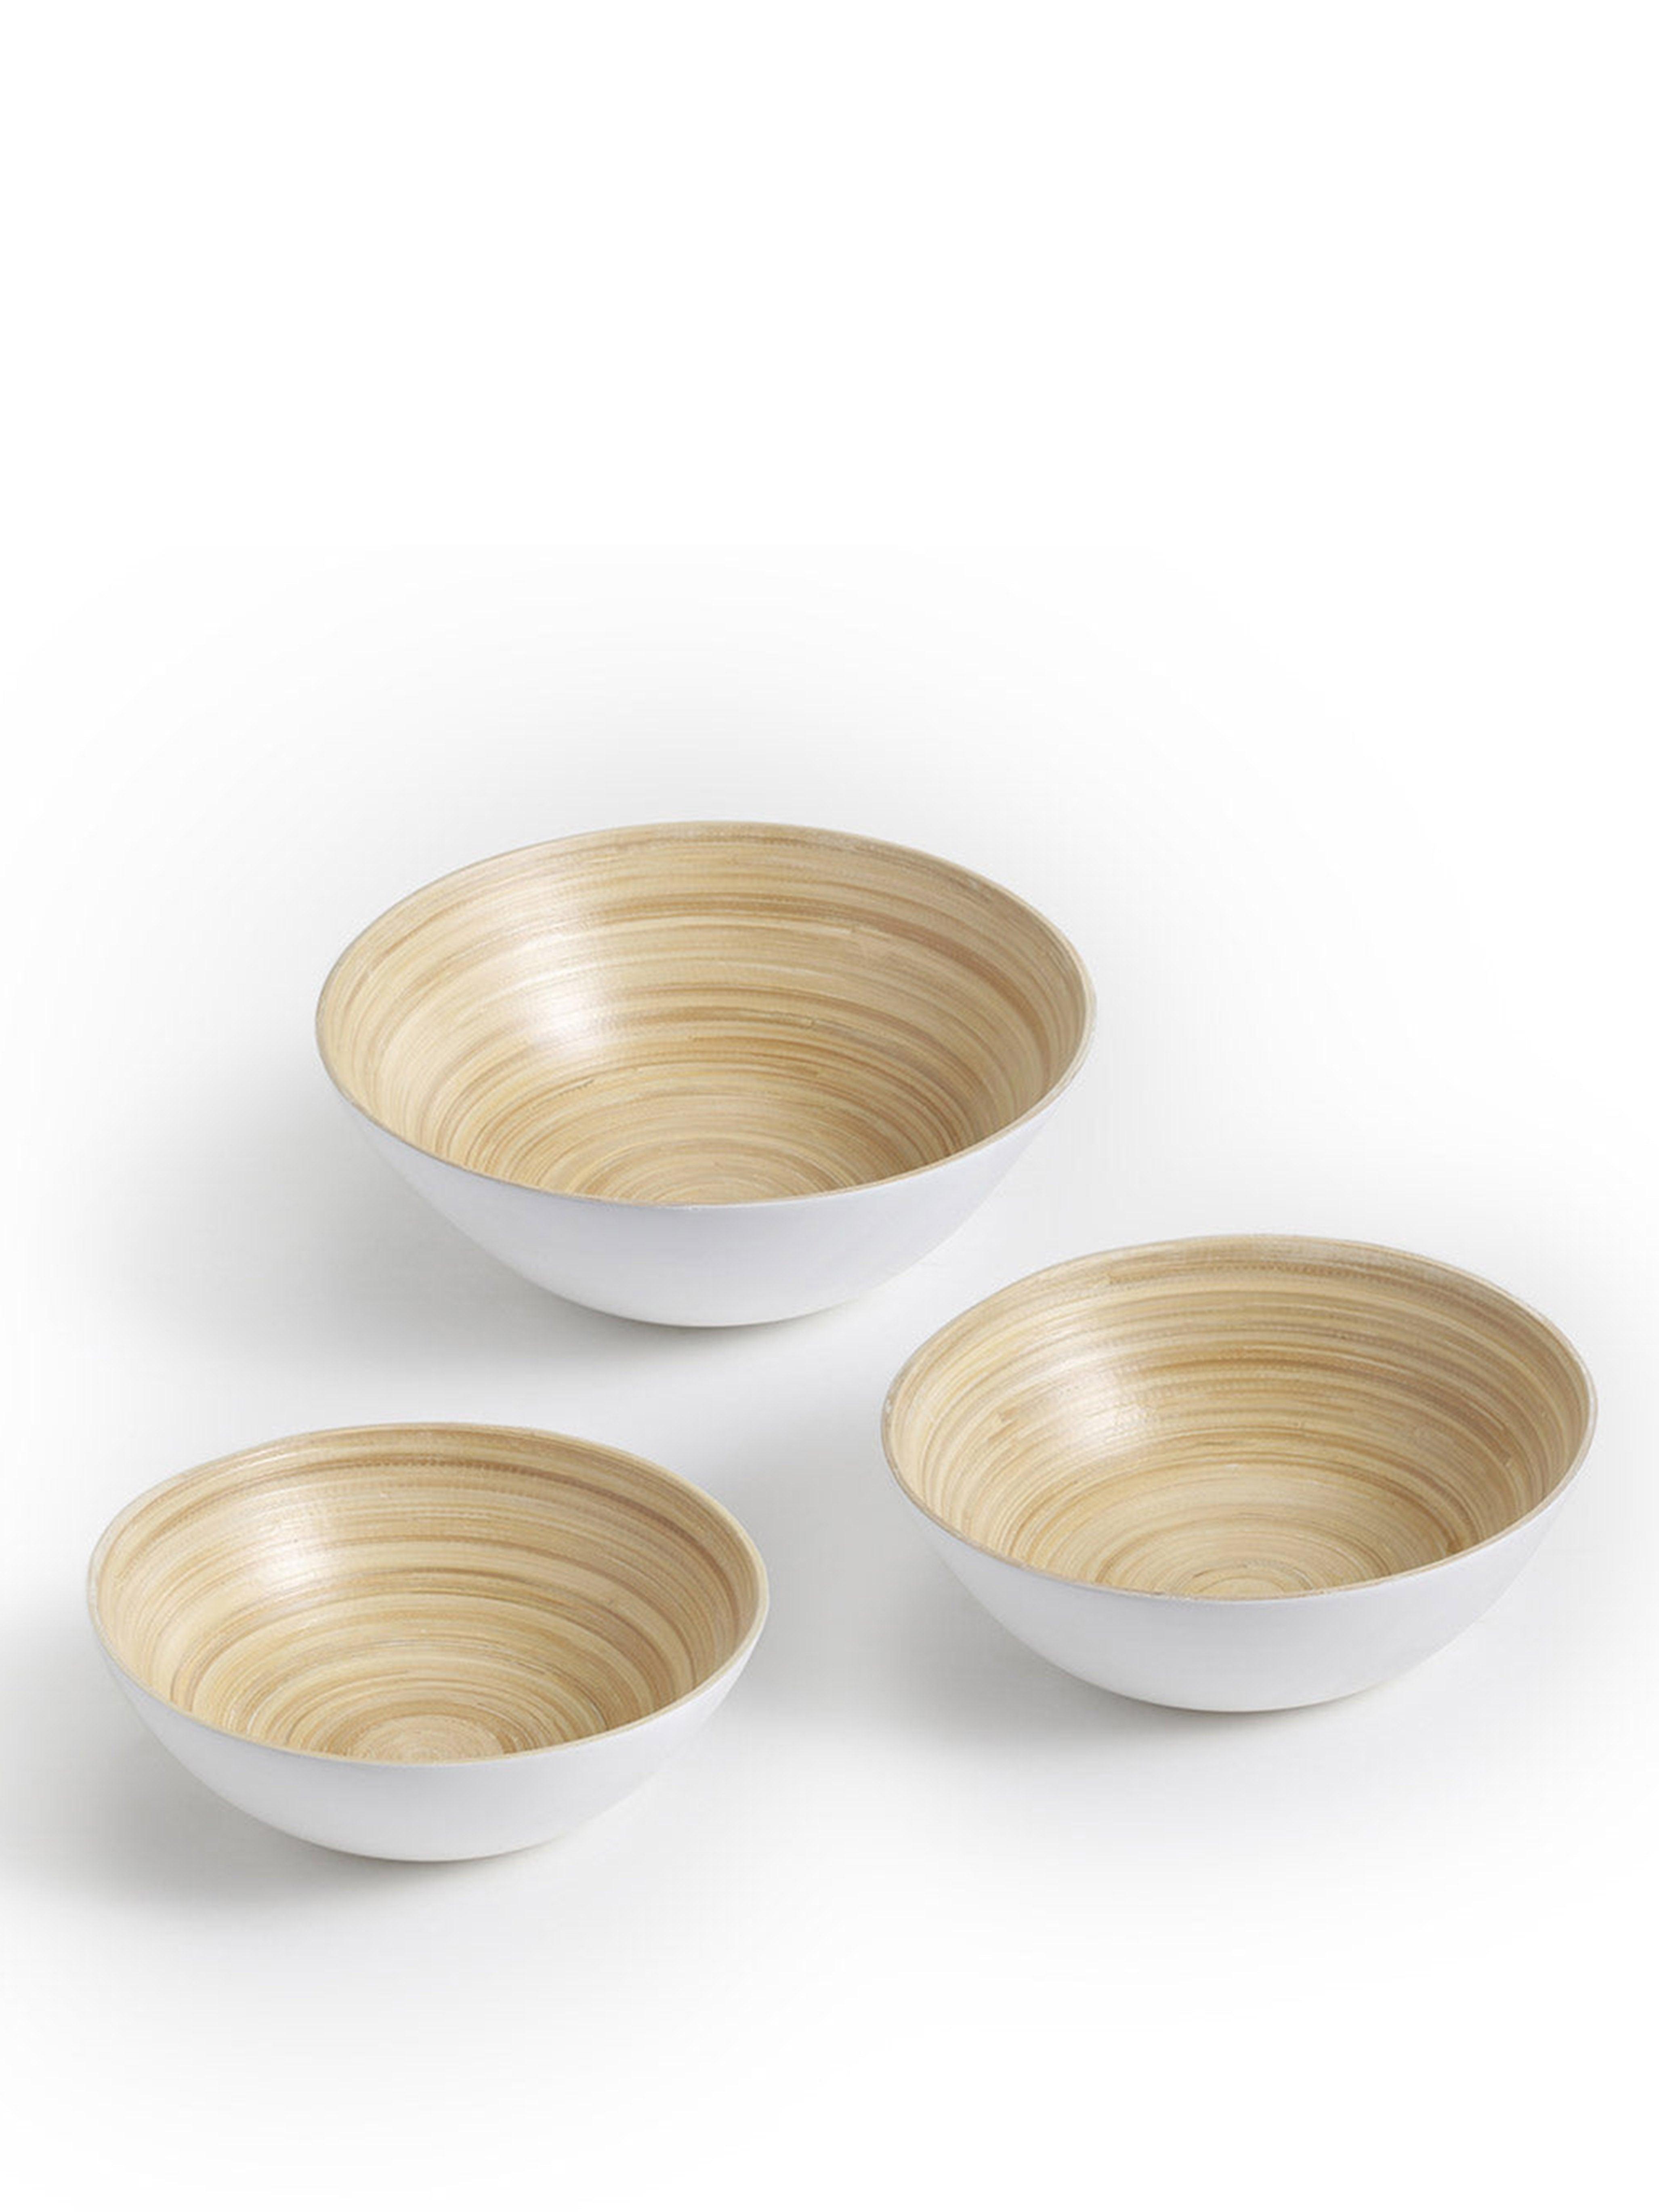 Venus Bamboo Bowls White set of 3 - Living Shapes